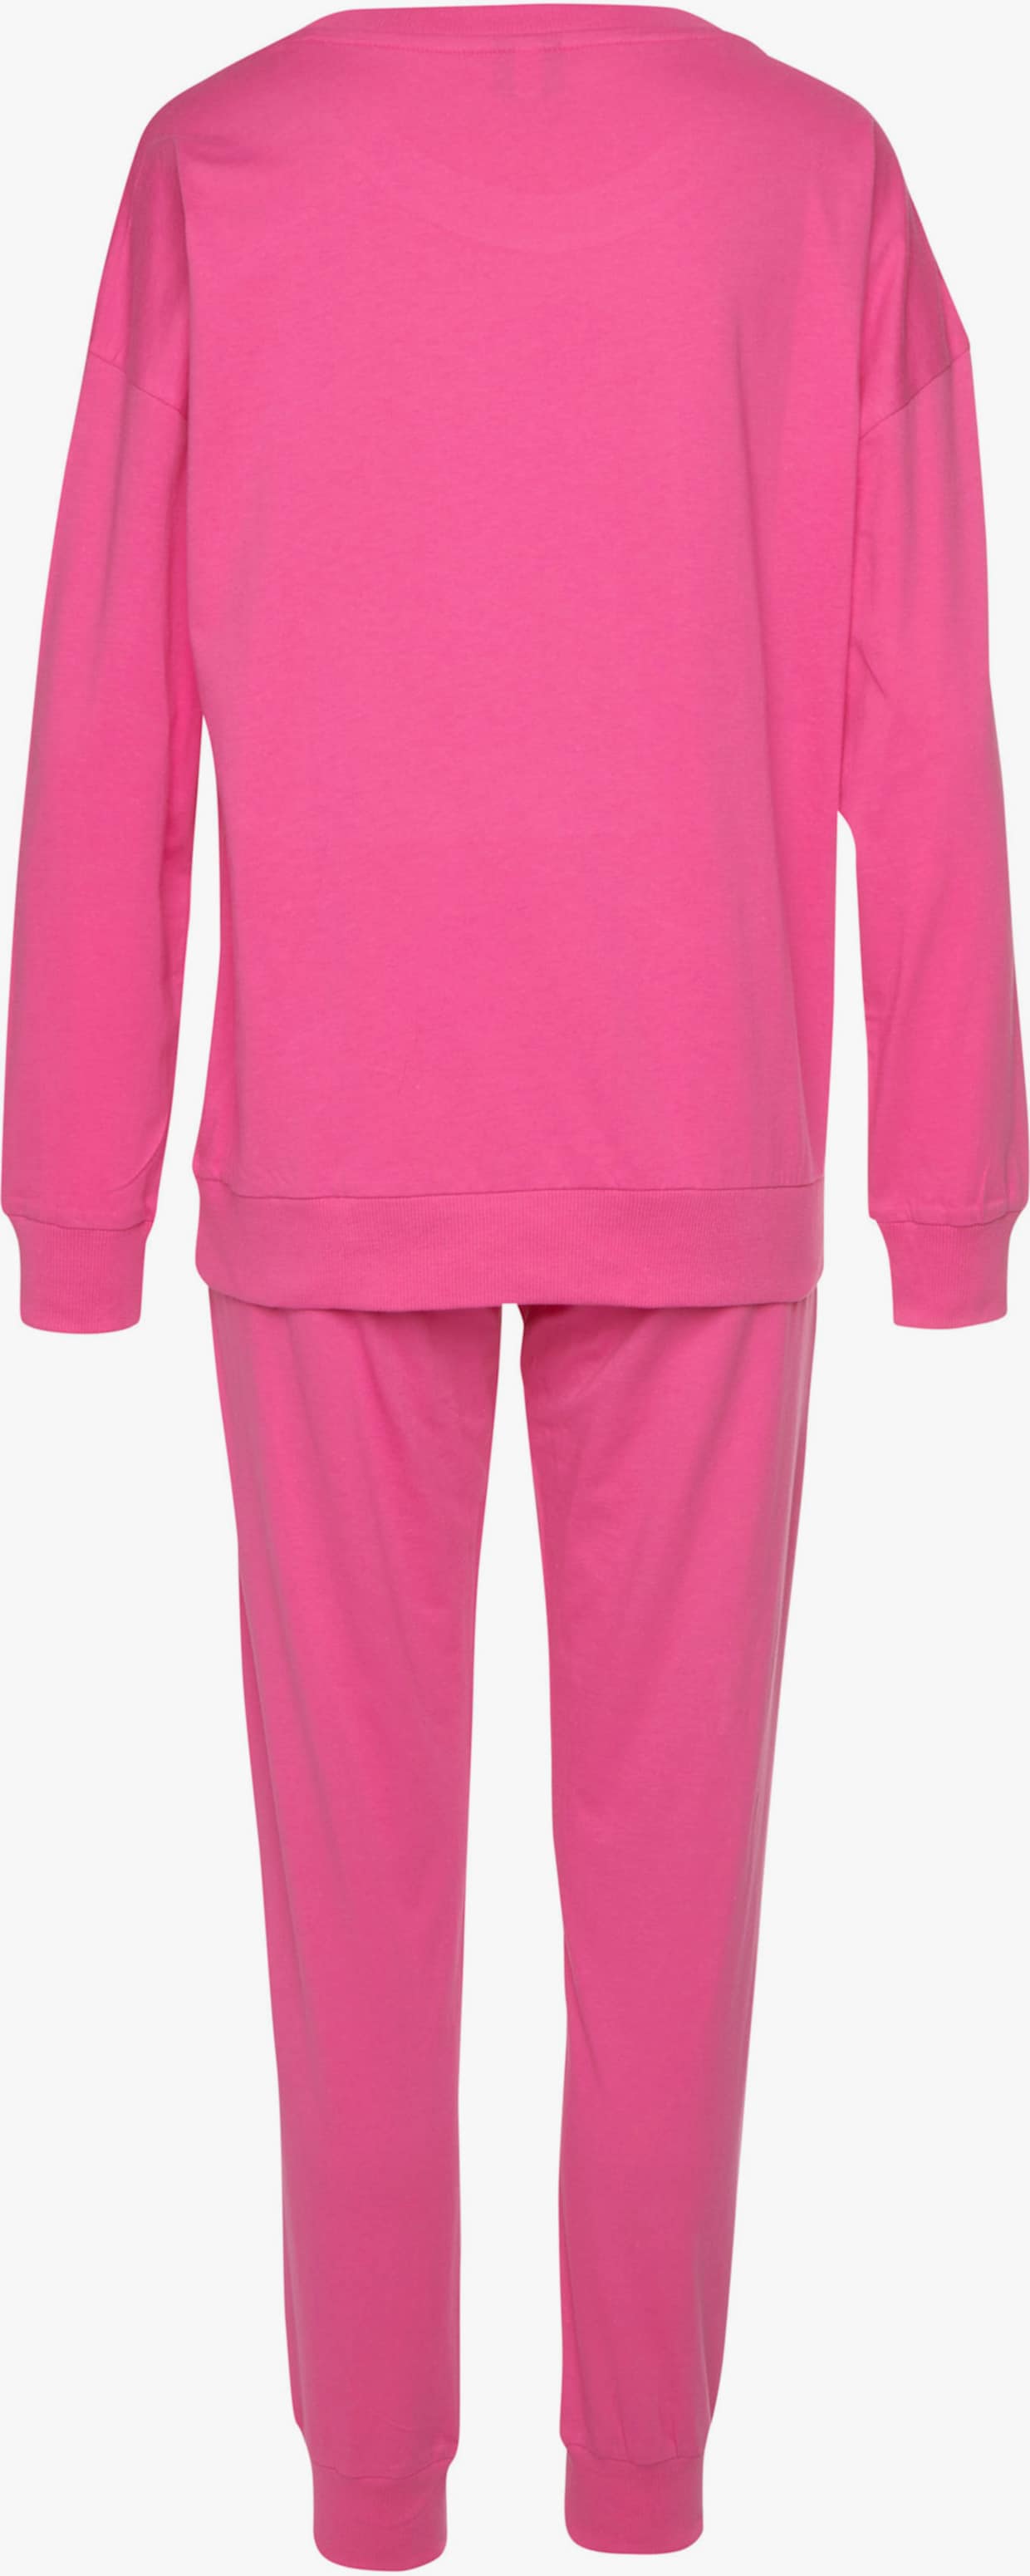 KangaROOS Pyjama - pink